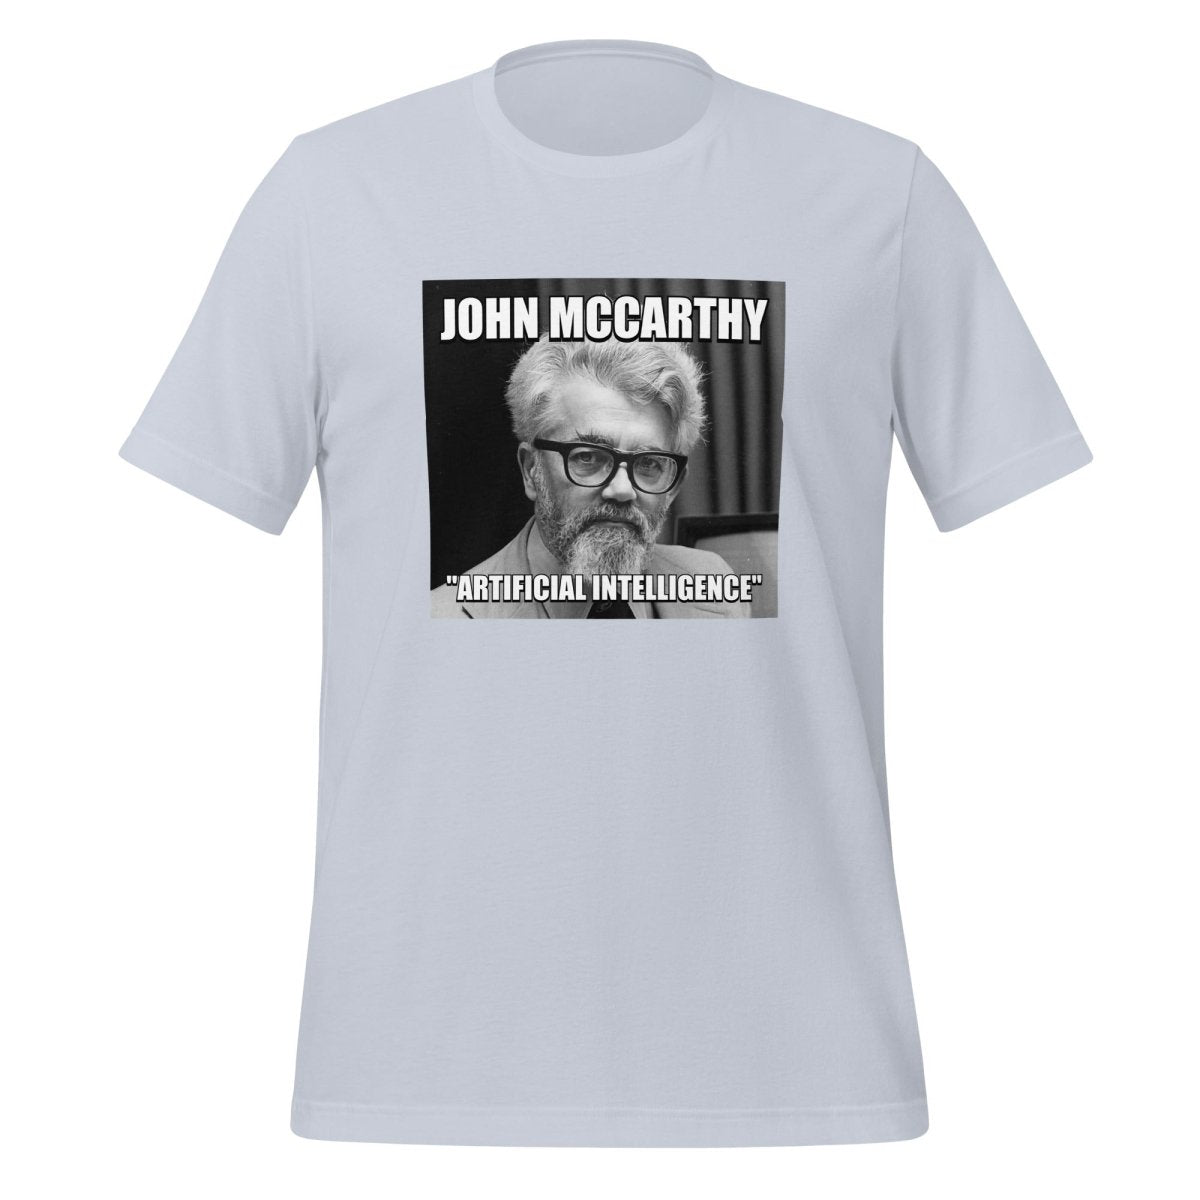 John McCarthy "Artificial Intelligence" T - Shirt (unisex) - Light Blue - AI Store